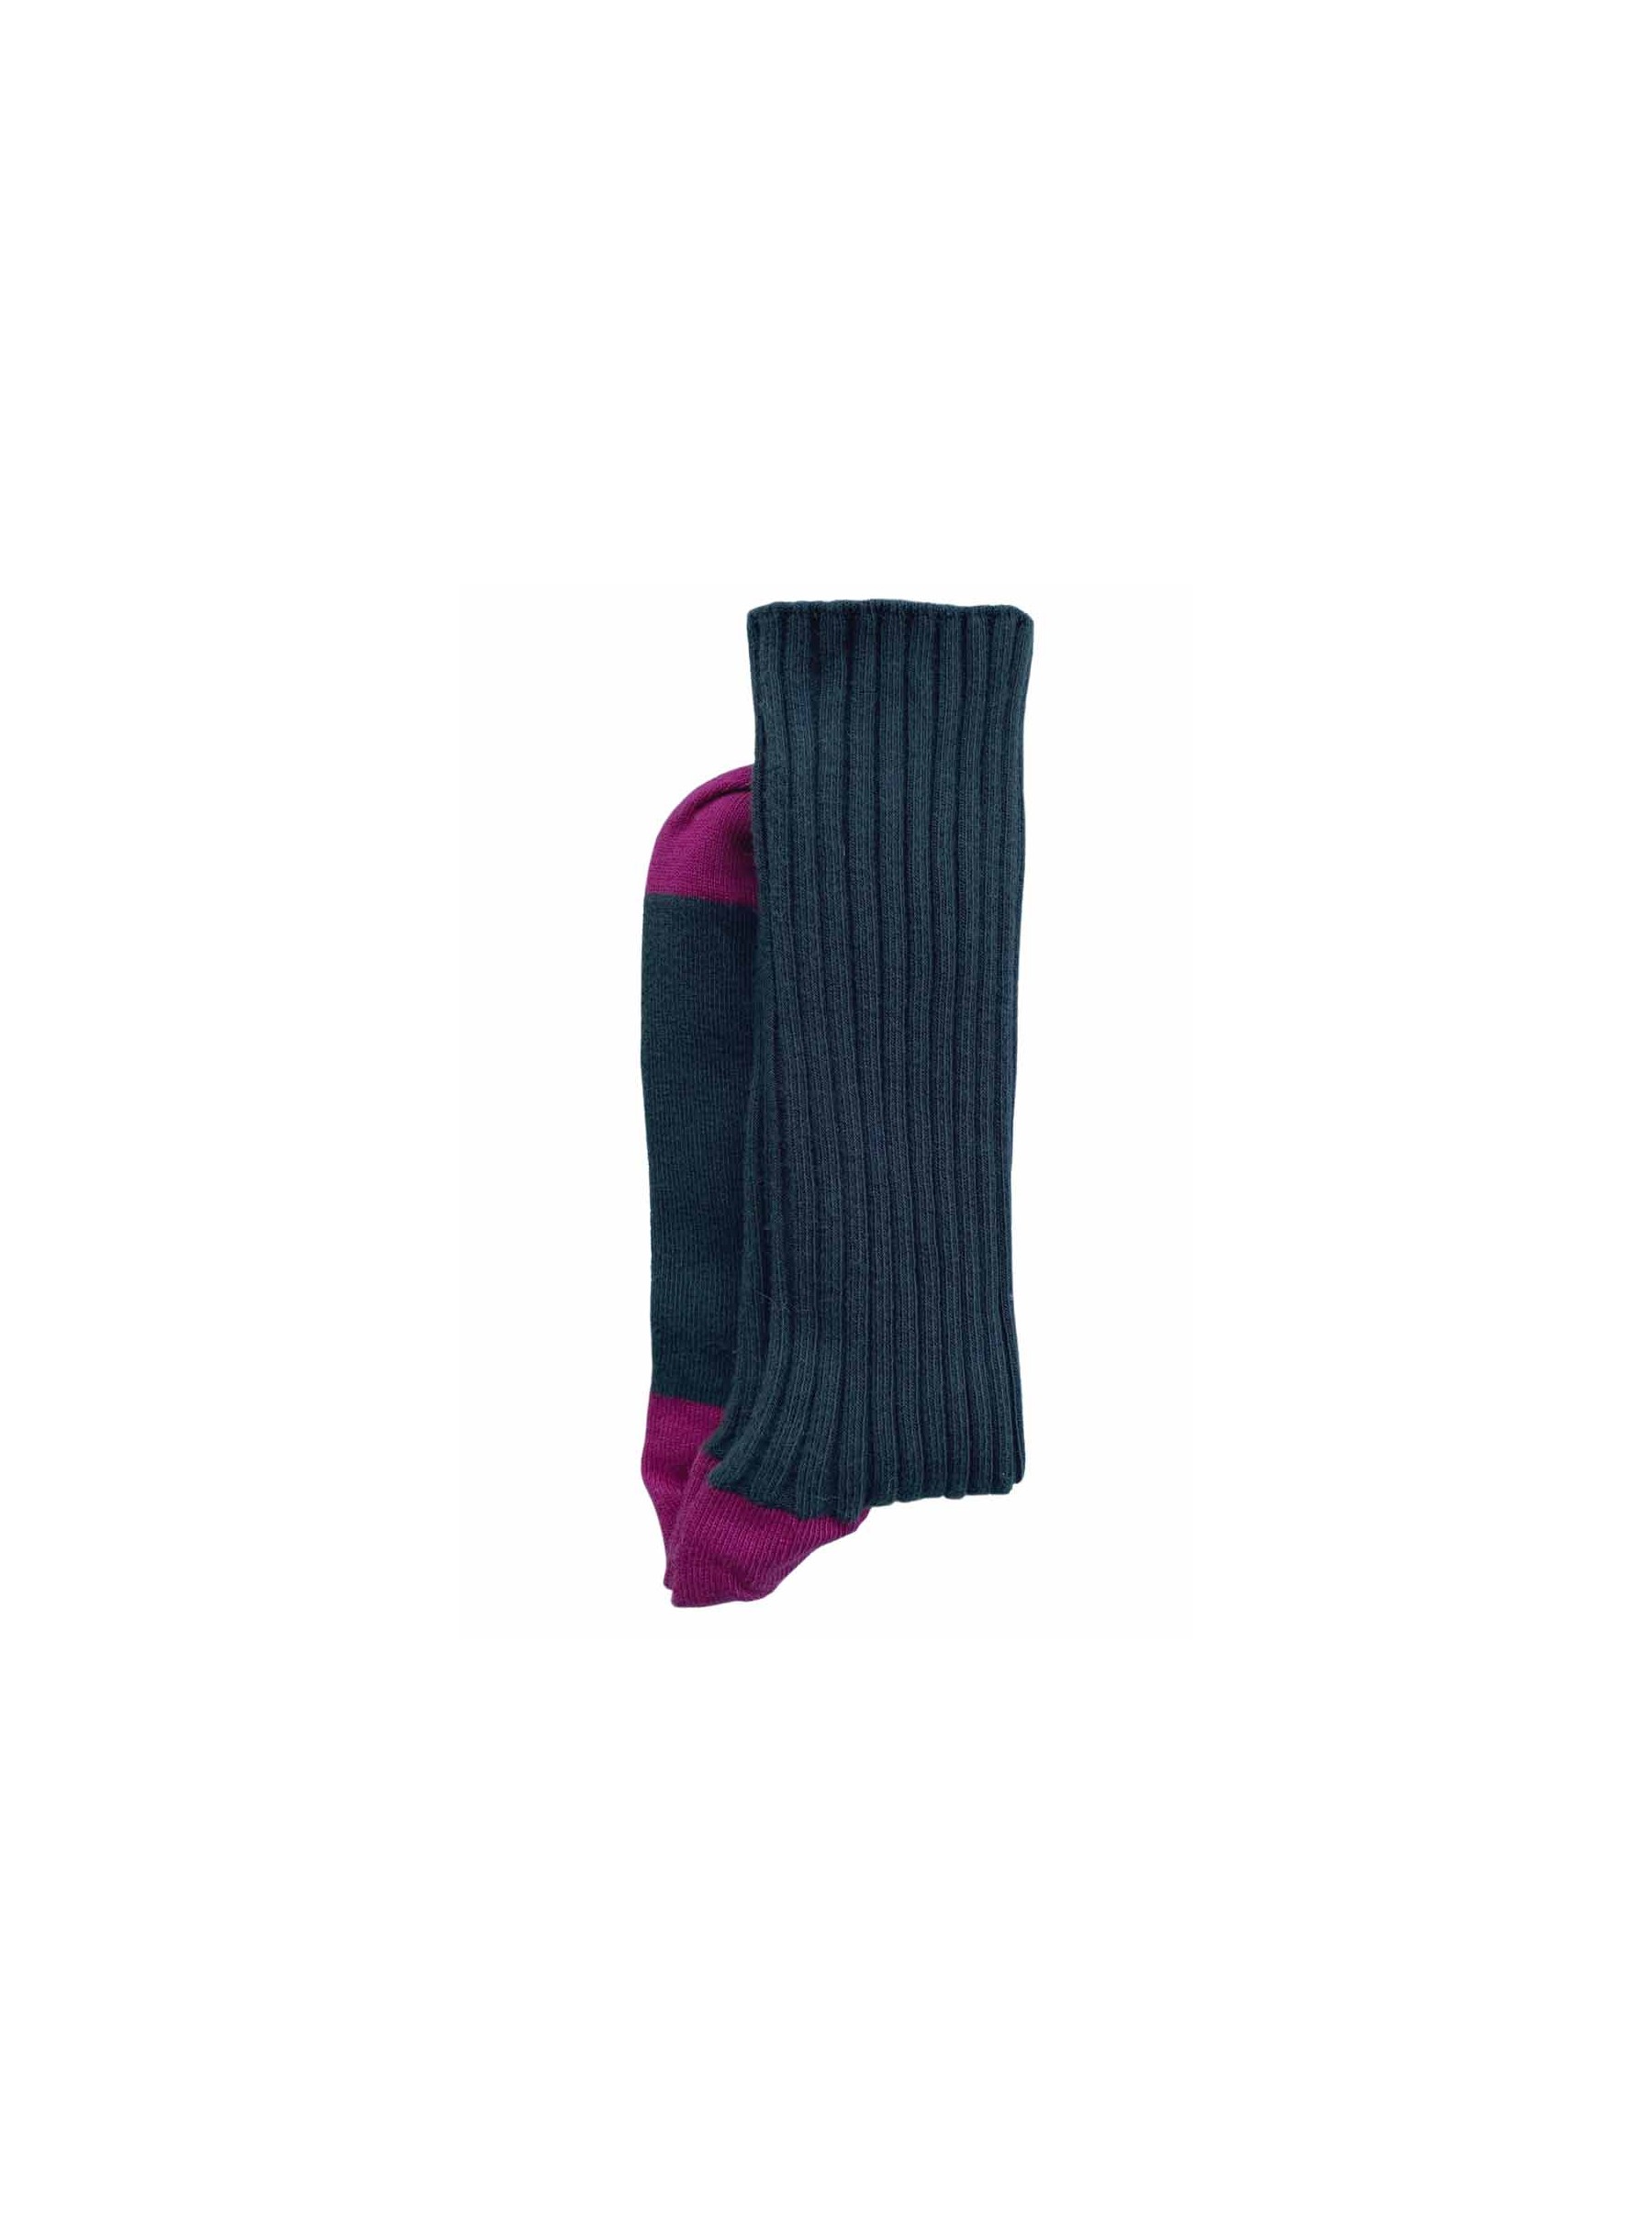 Socks cotton black bicolour